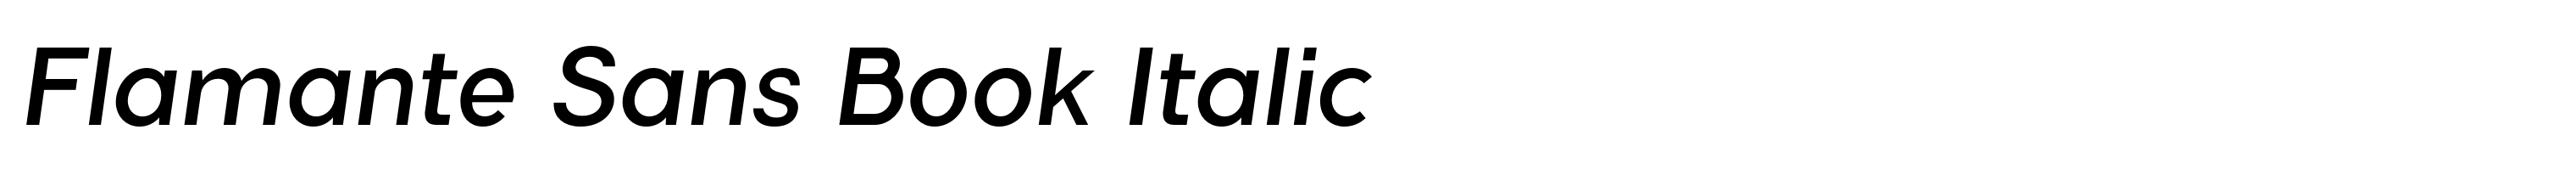 Flamante Sans Book Italic